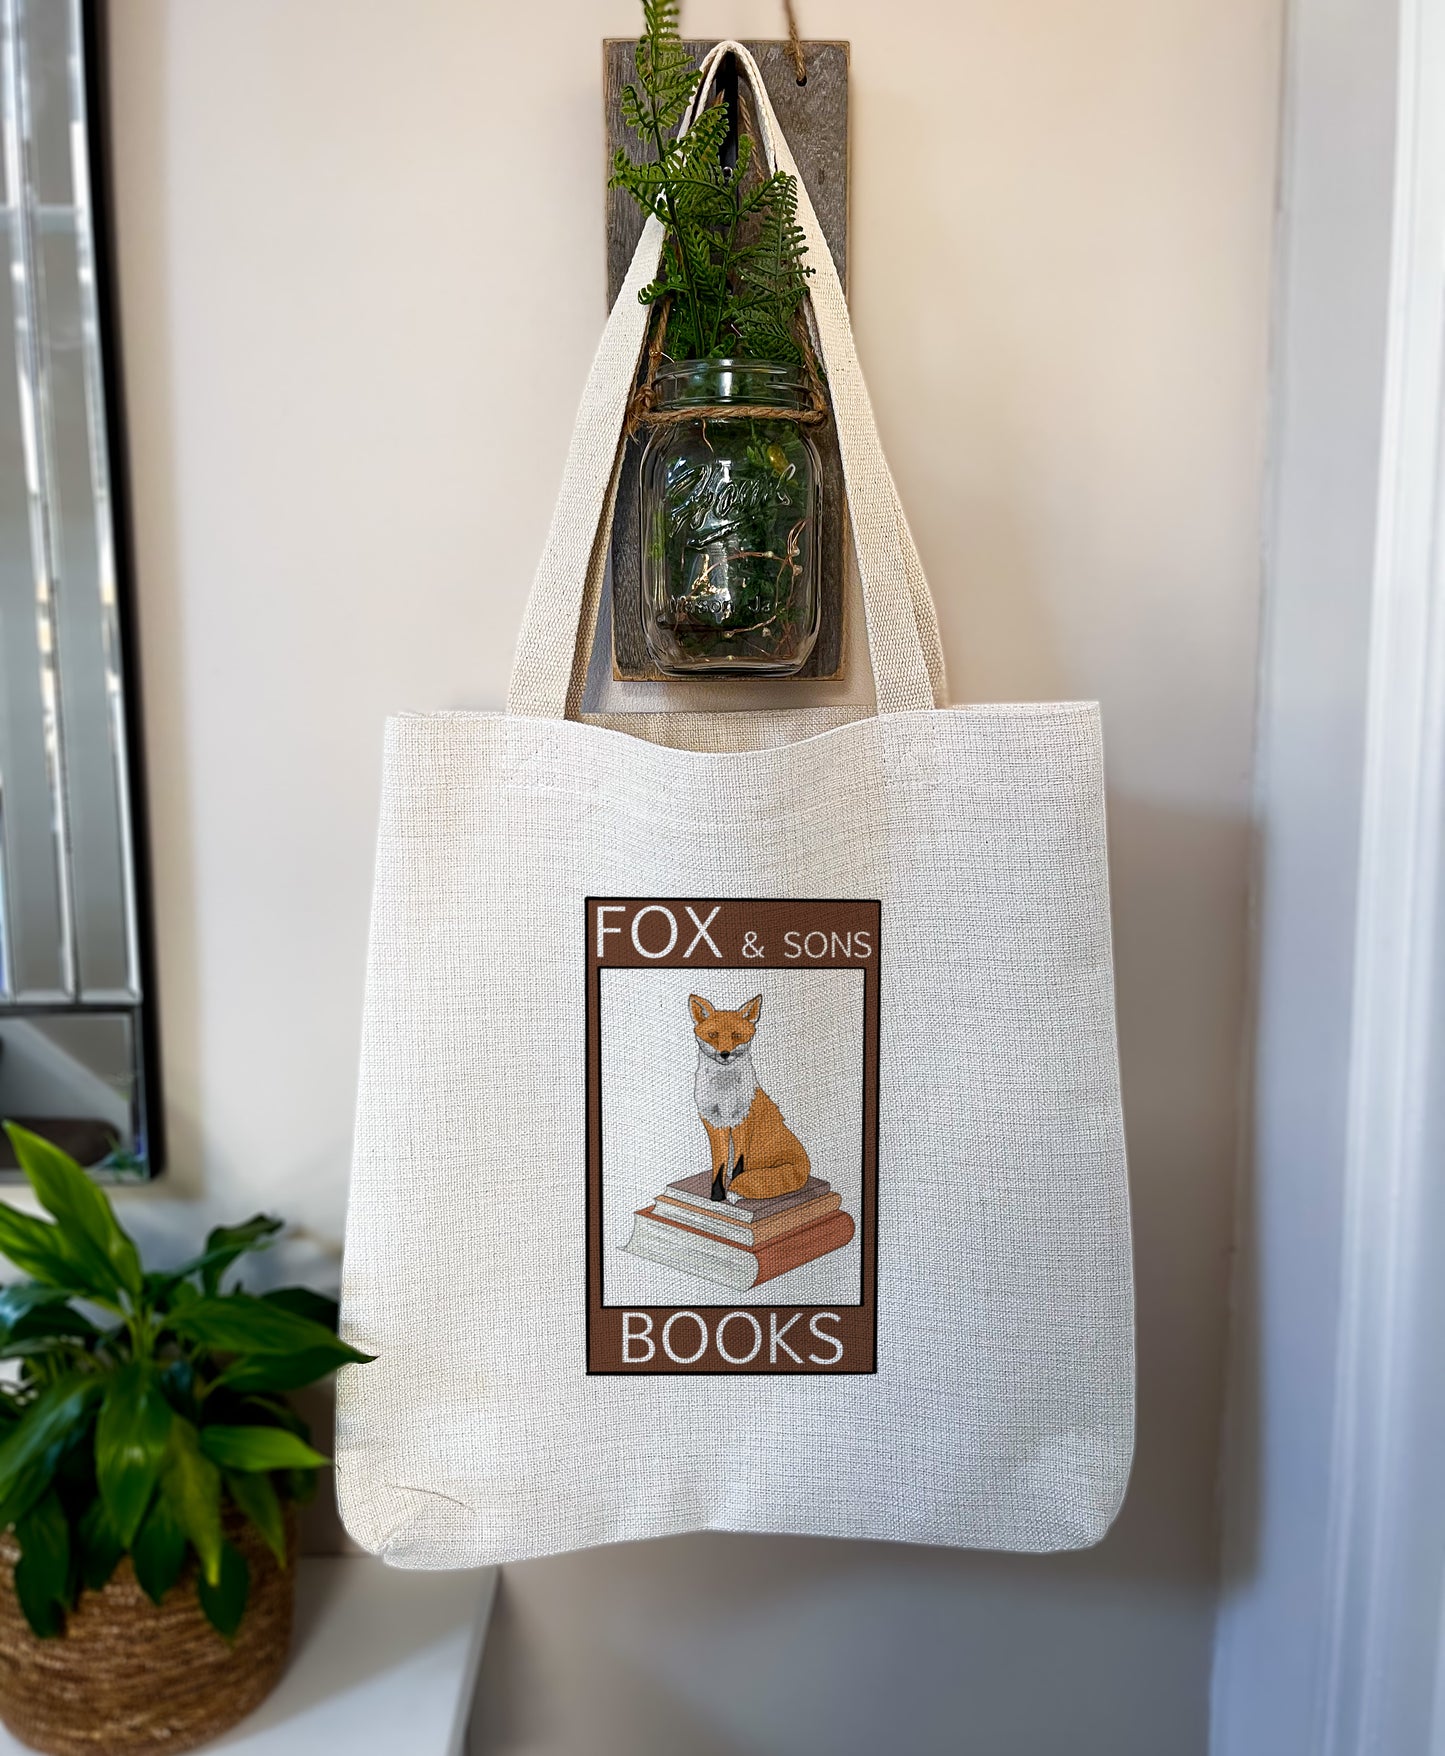 You've Got Mail, Fox Books Tote Bag